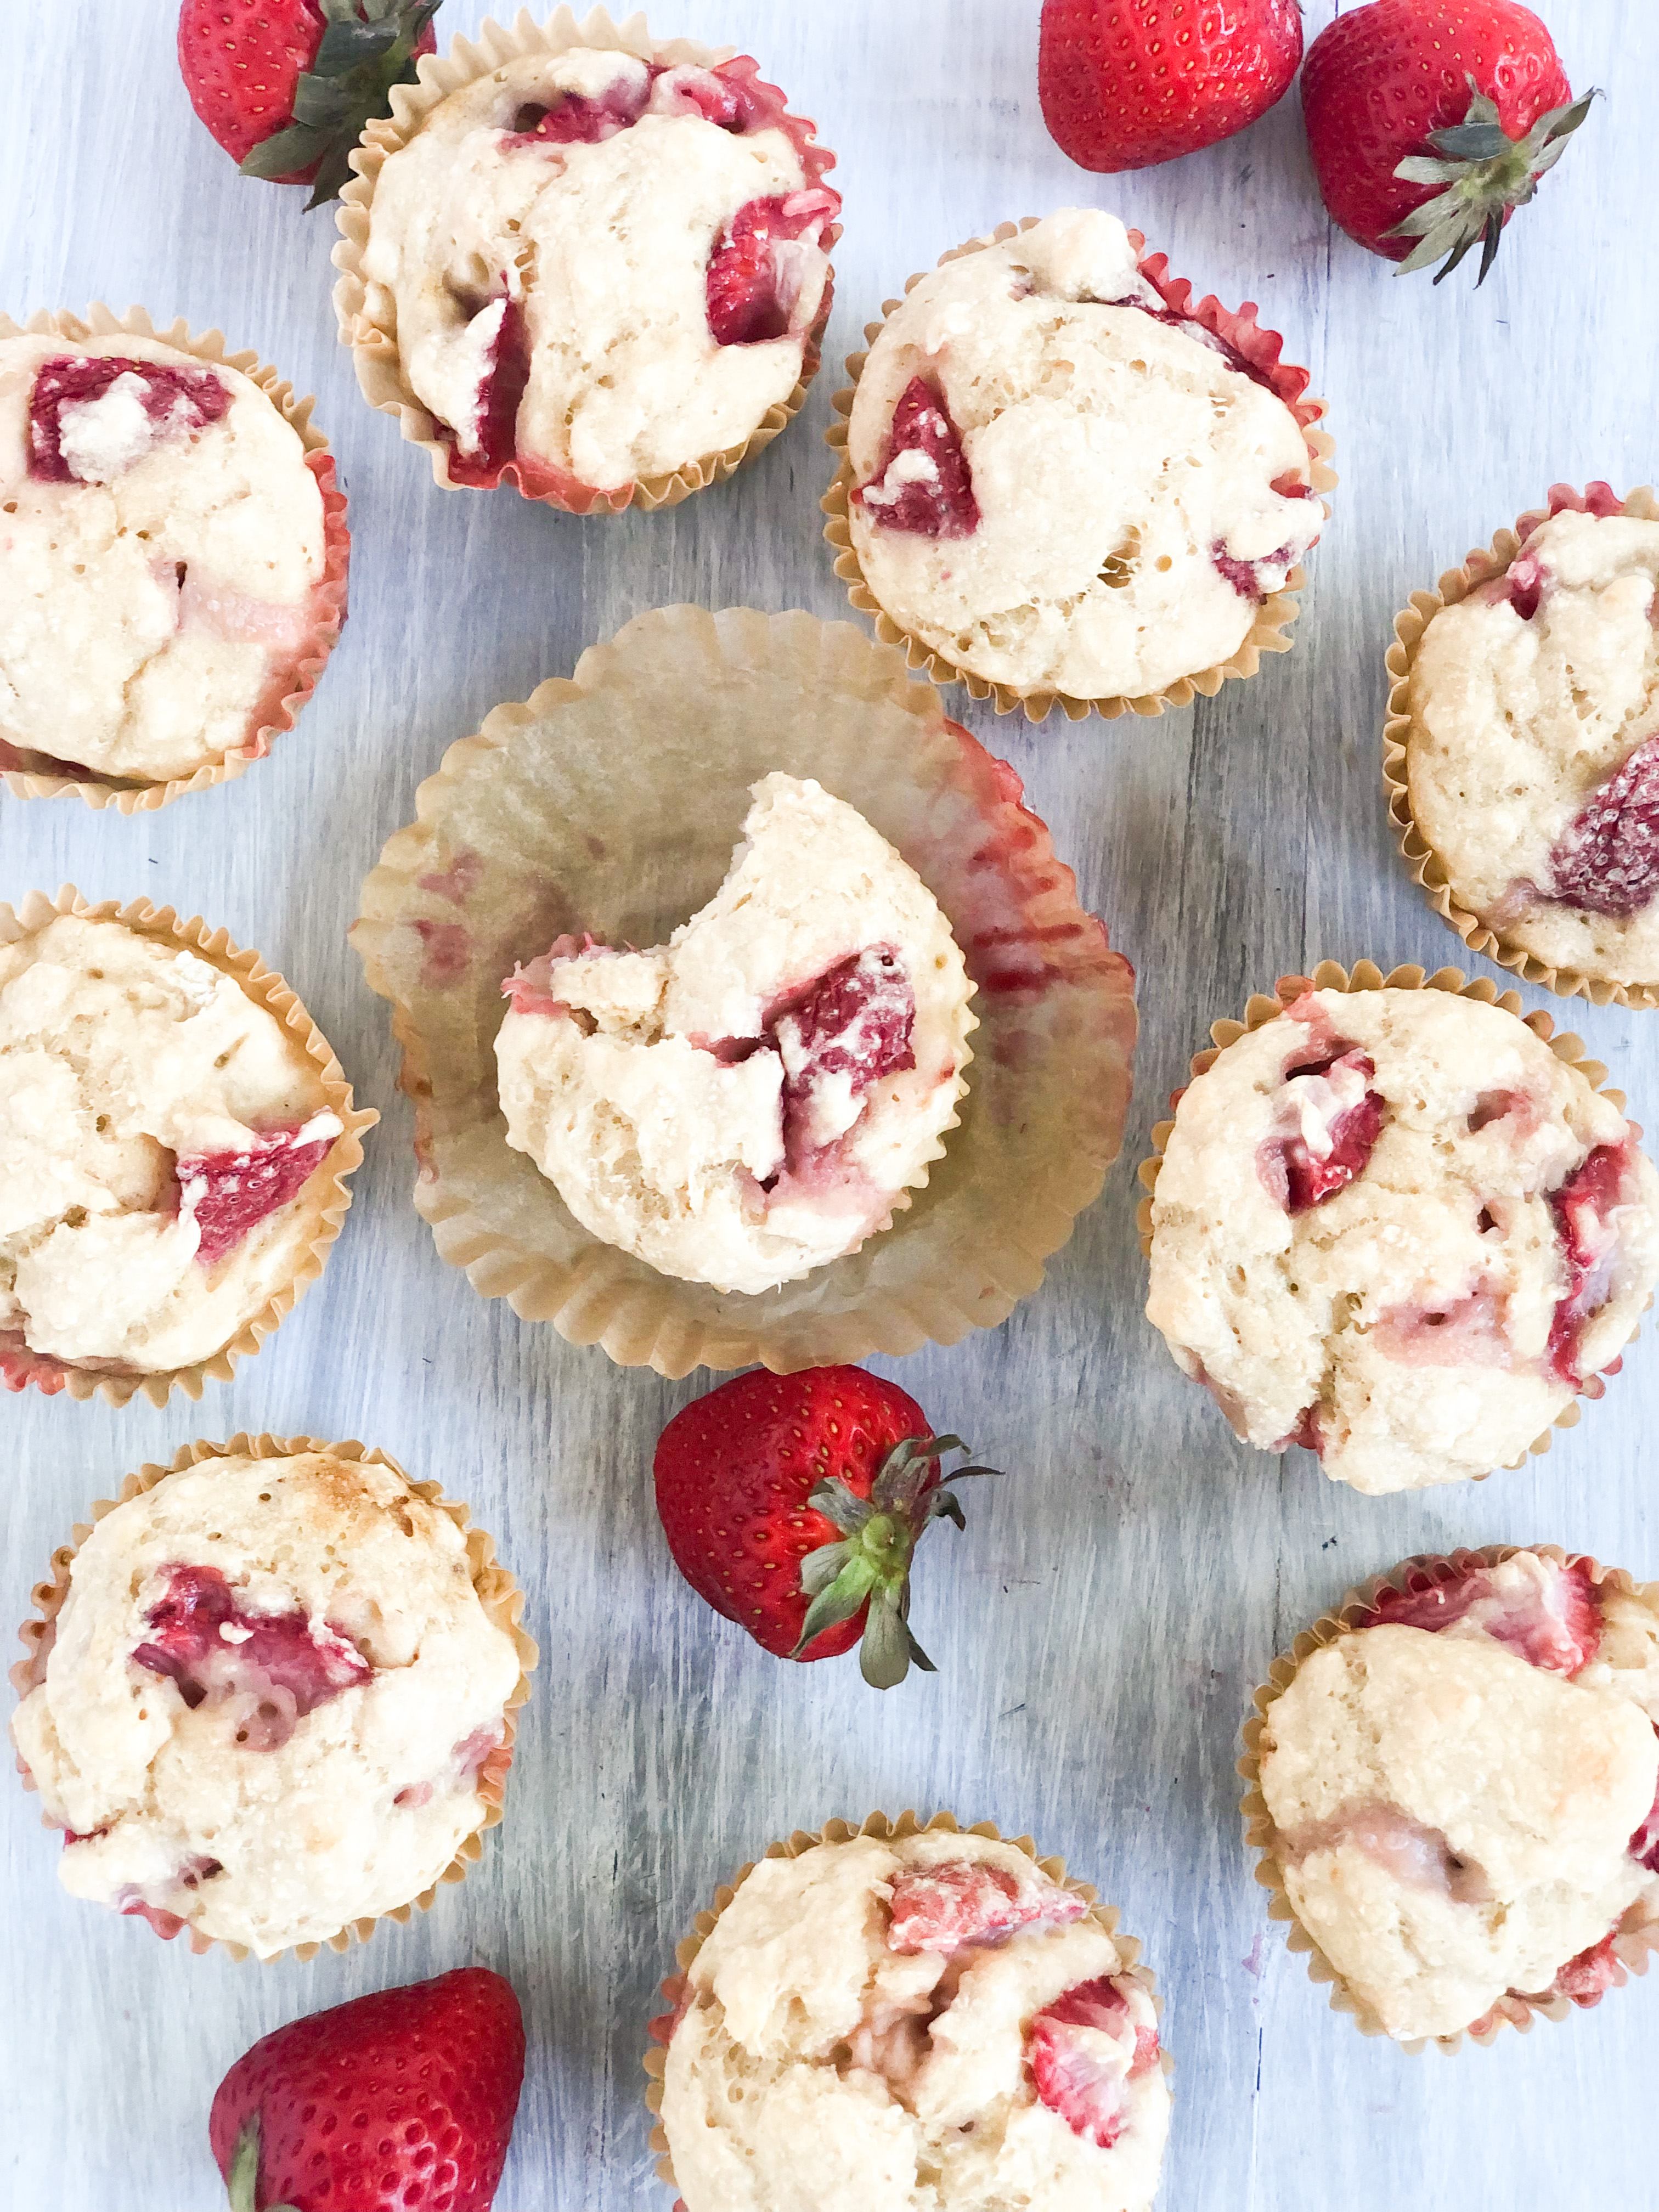 Healthy-ish Vegan Strawberry Muffins